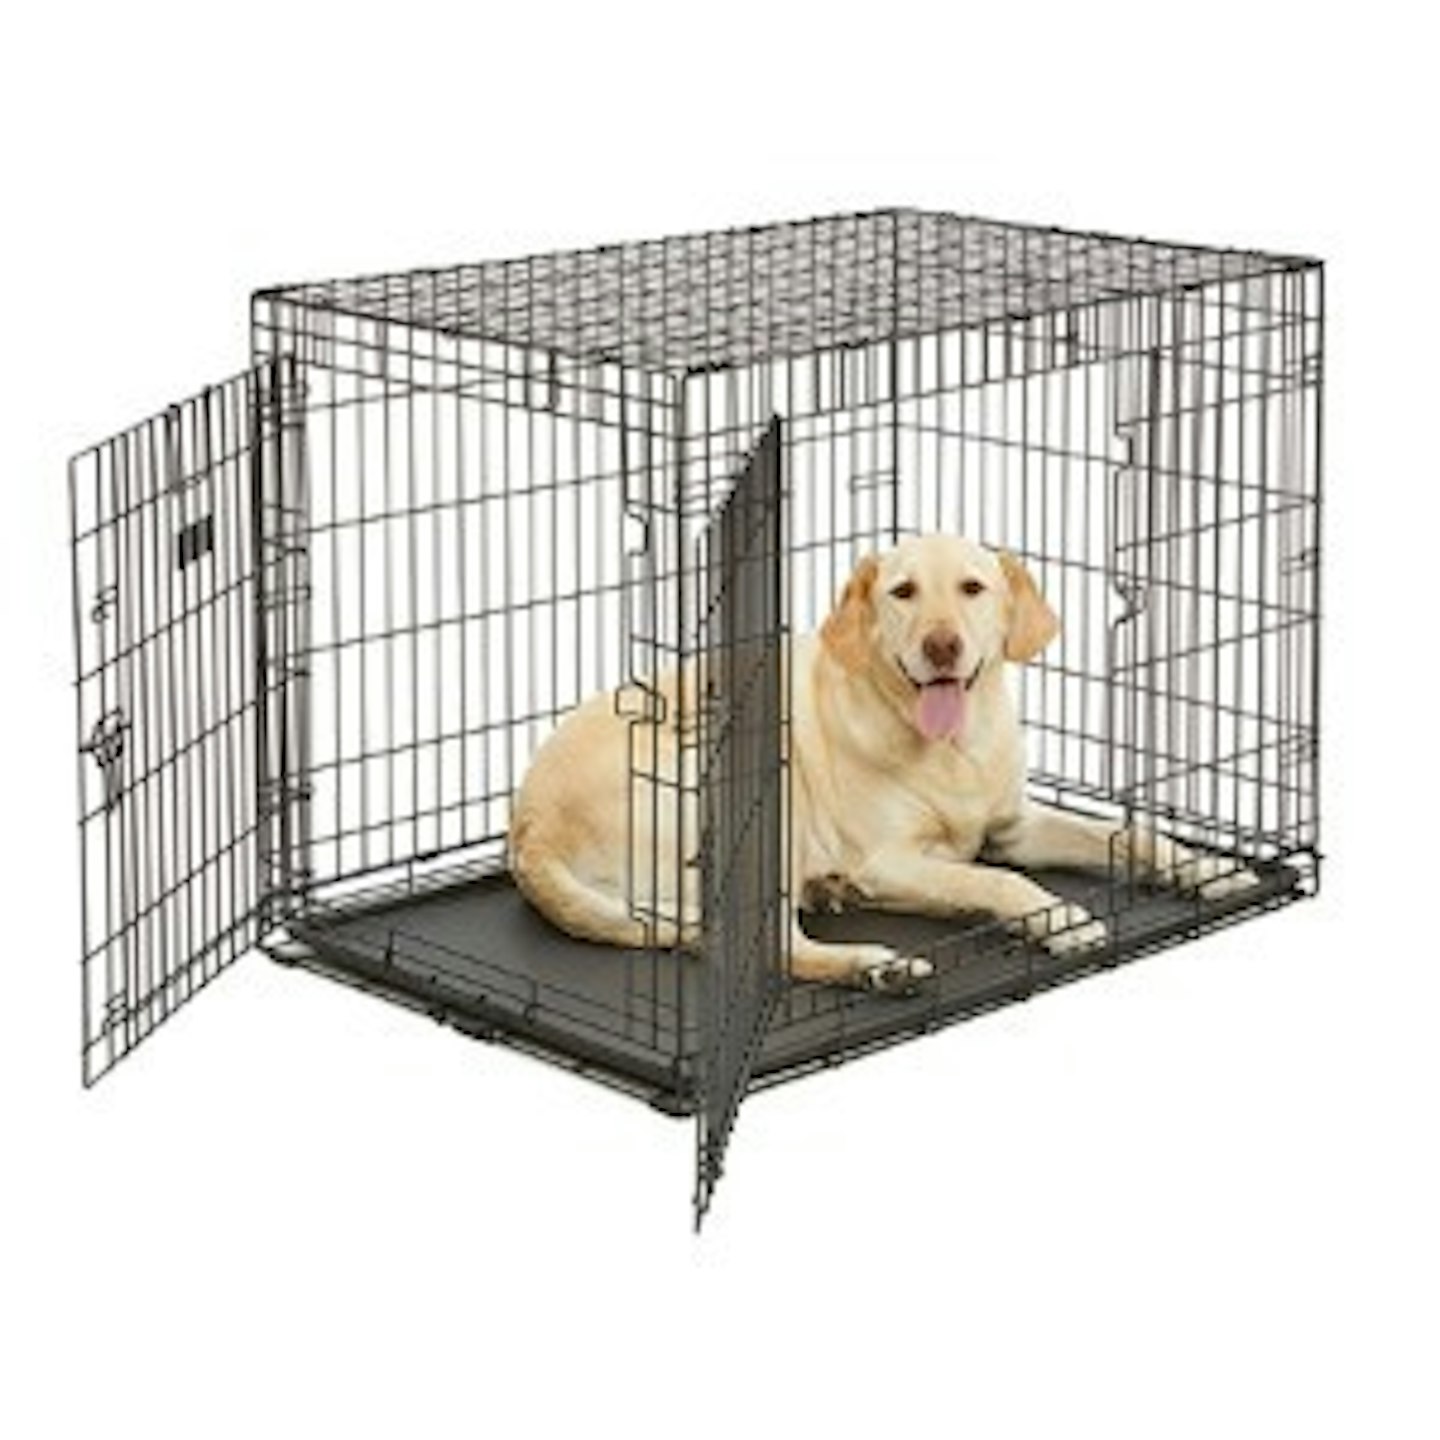 https://www.petsathome.com/shop/en/pets/kong-two-door-ultra-strong-dog-crate-large?